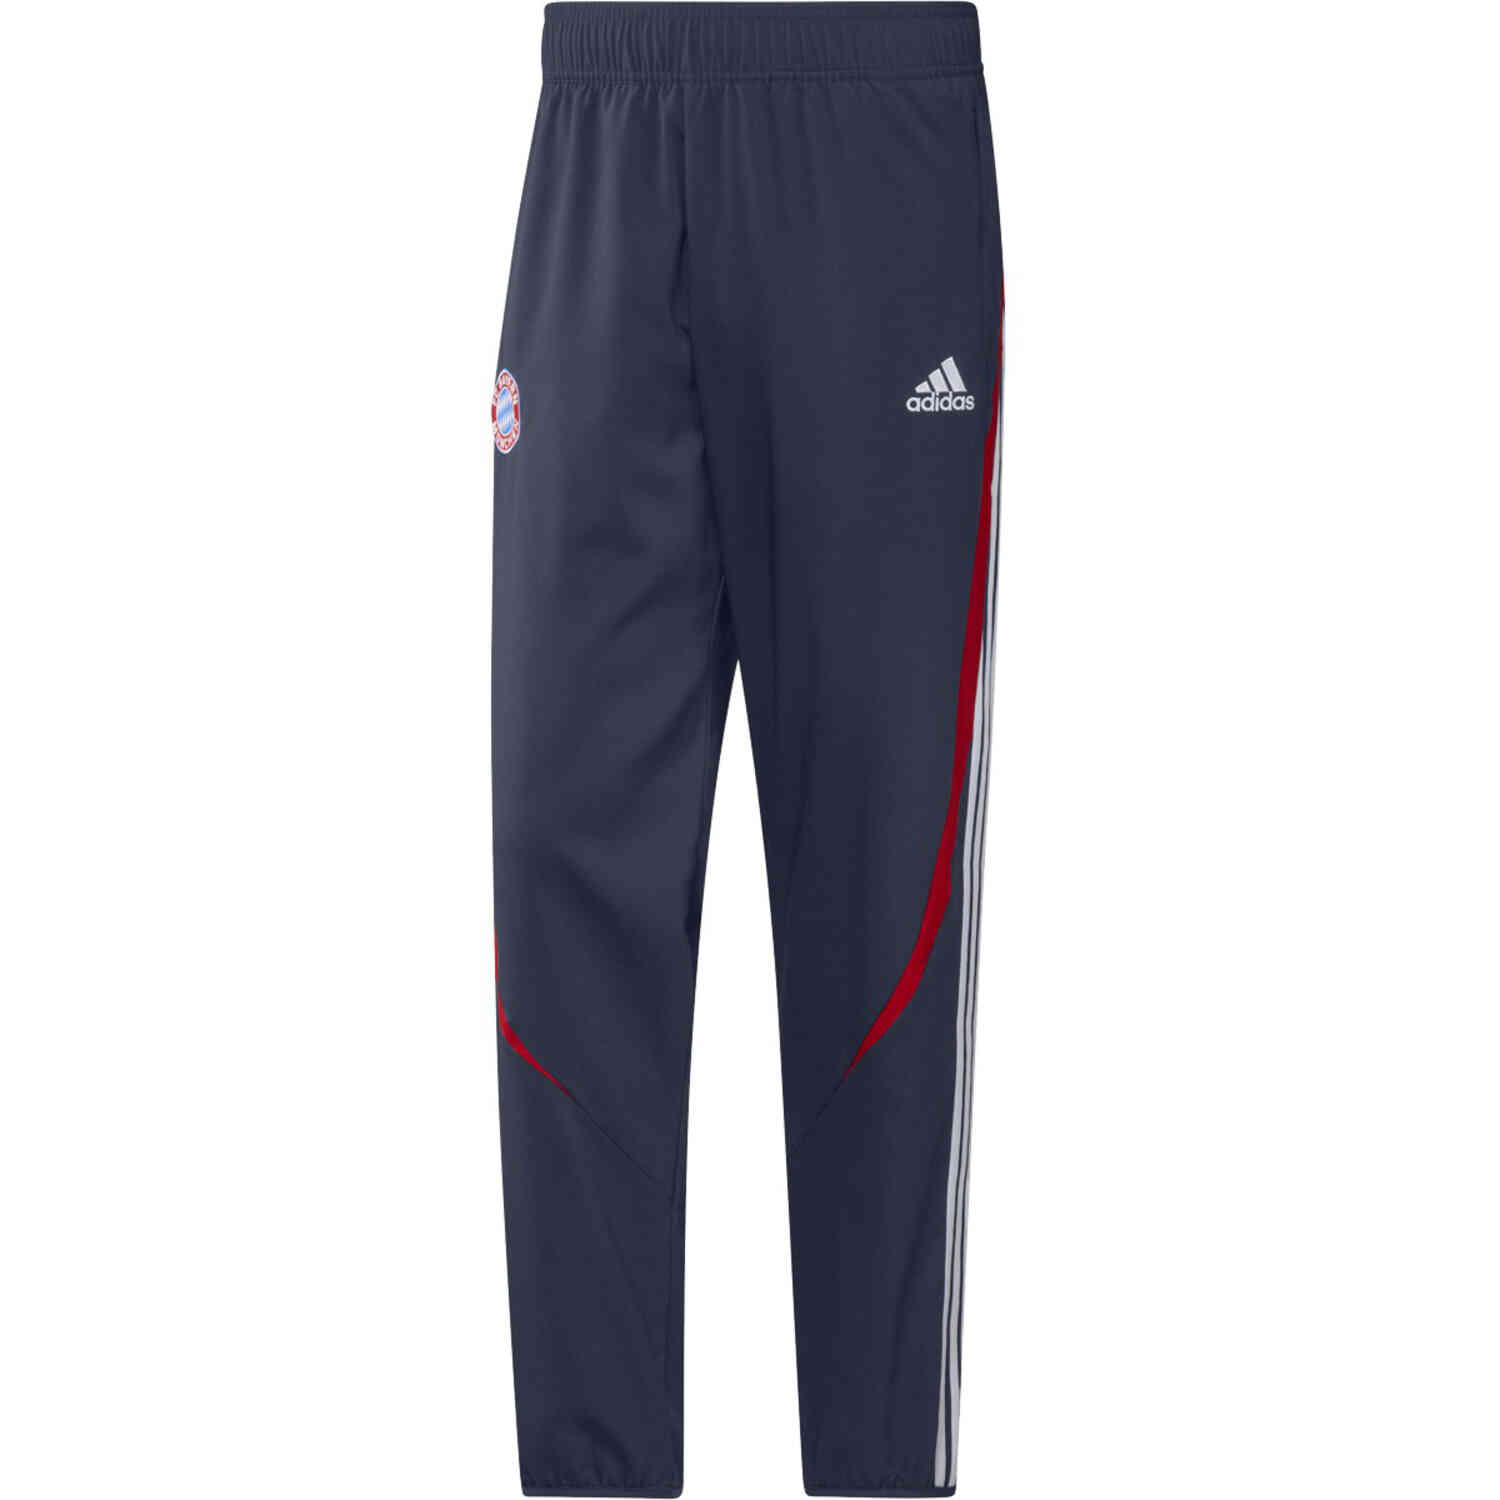 adidas Soccer Pants - Soccer Master